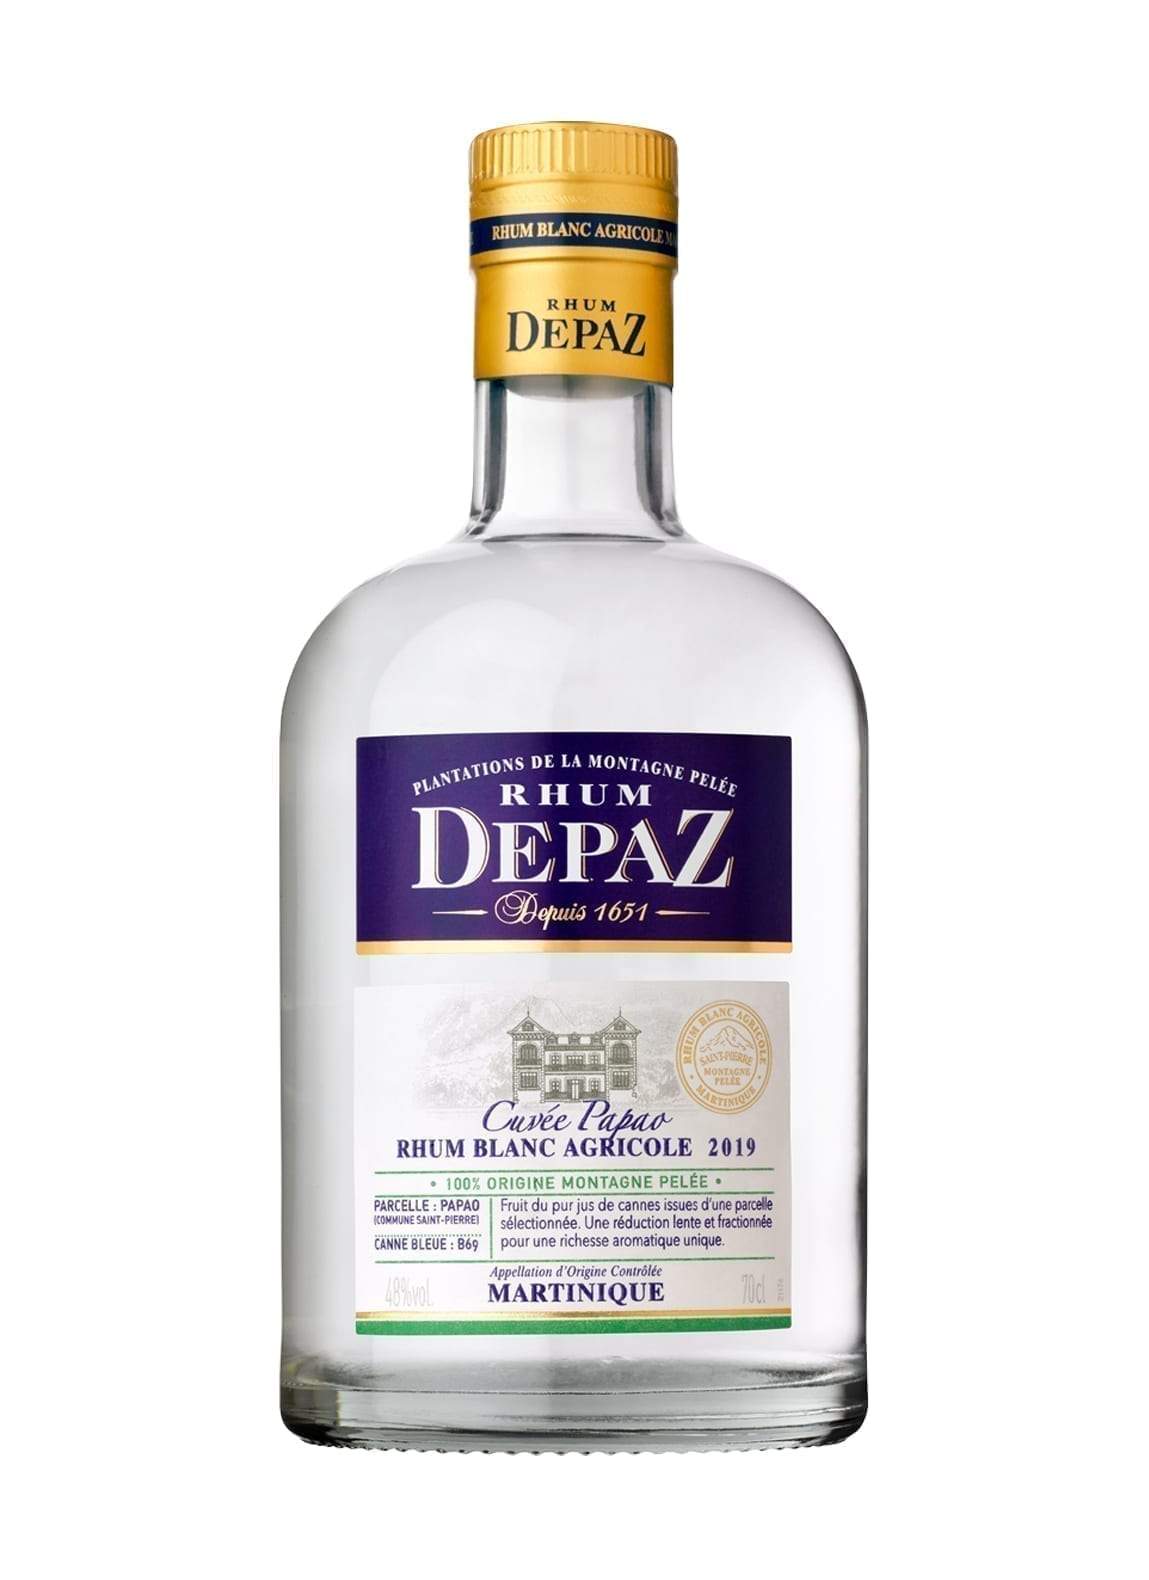 Depaz Rhum Blanc Agricole CuvŽe Papao 48% 700ml | Rum | Shop online at Spirits of France